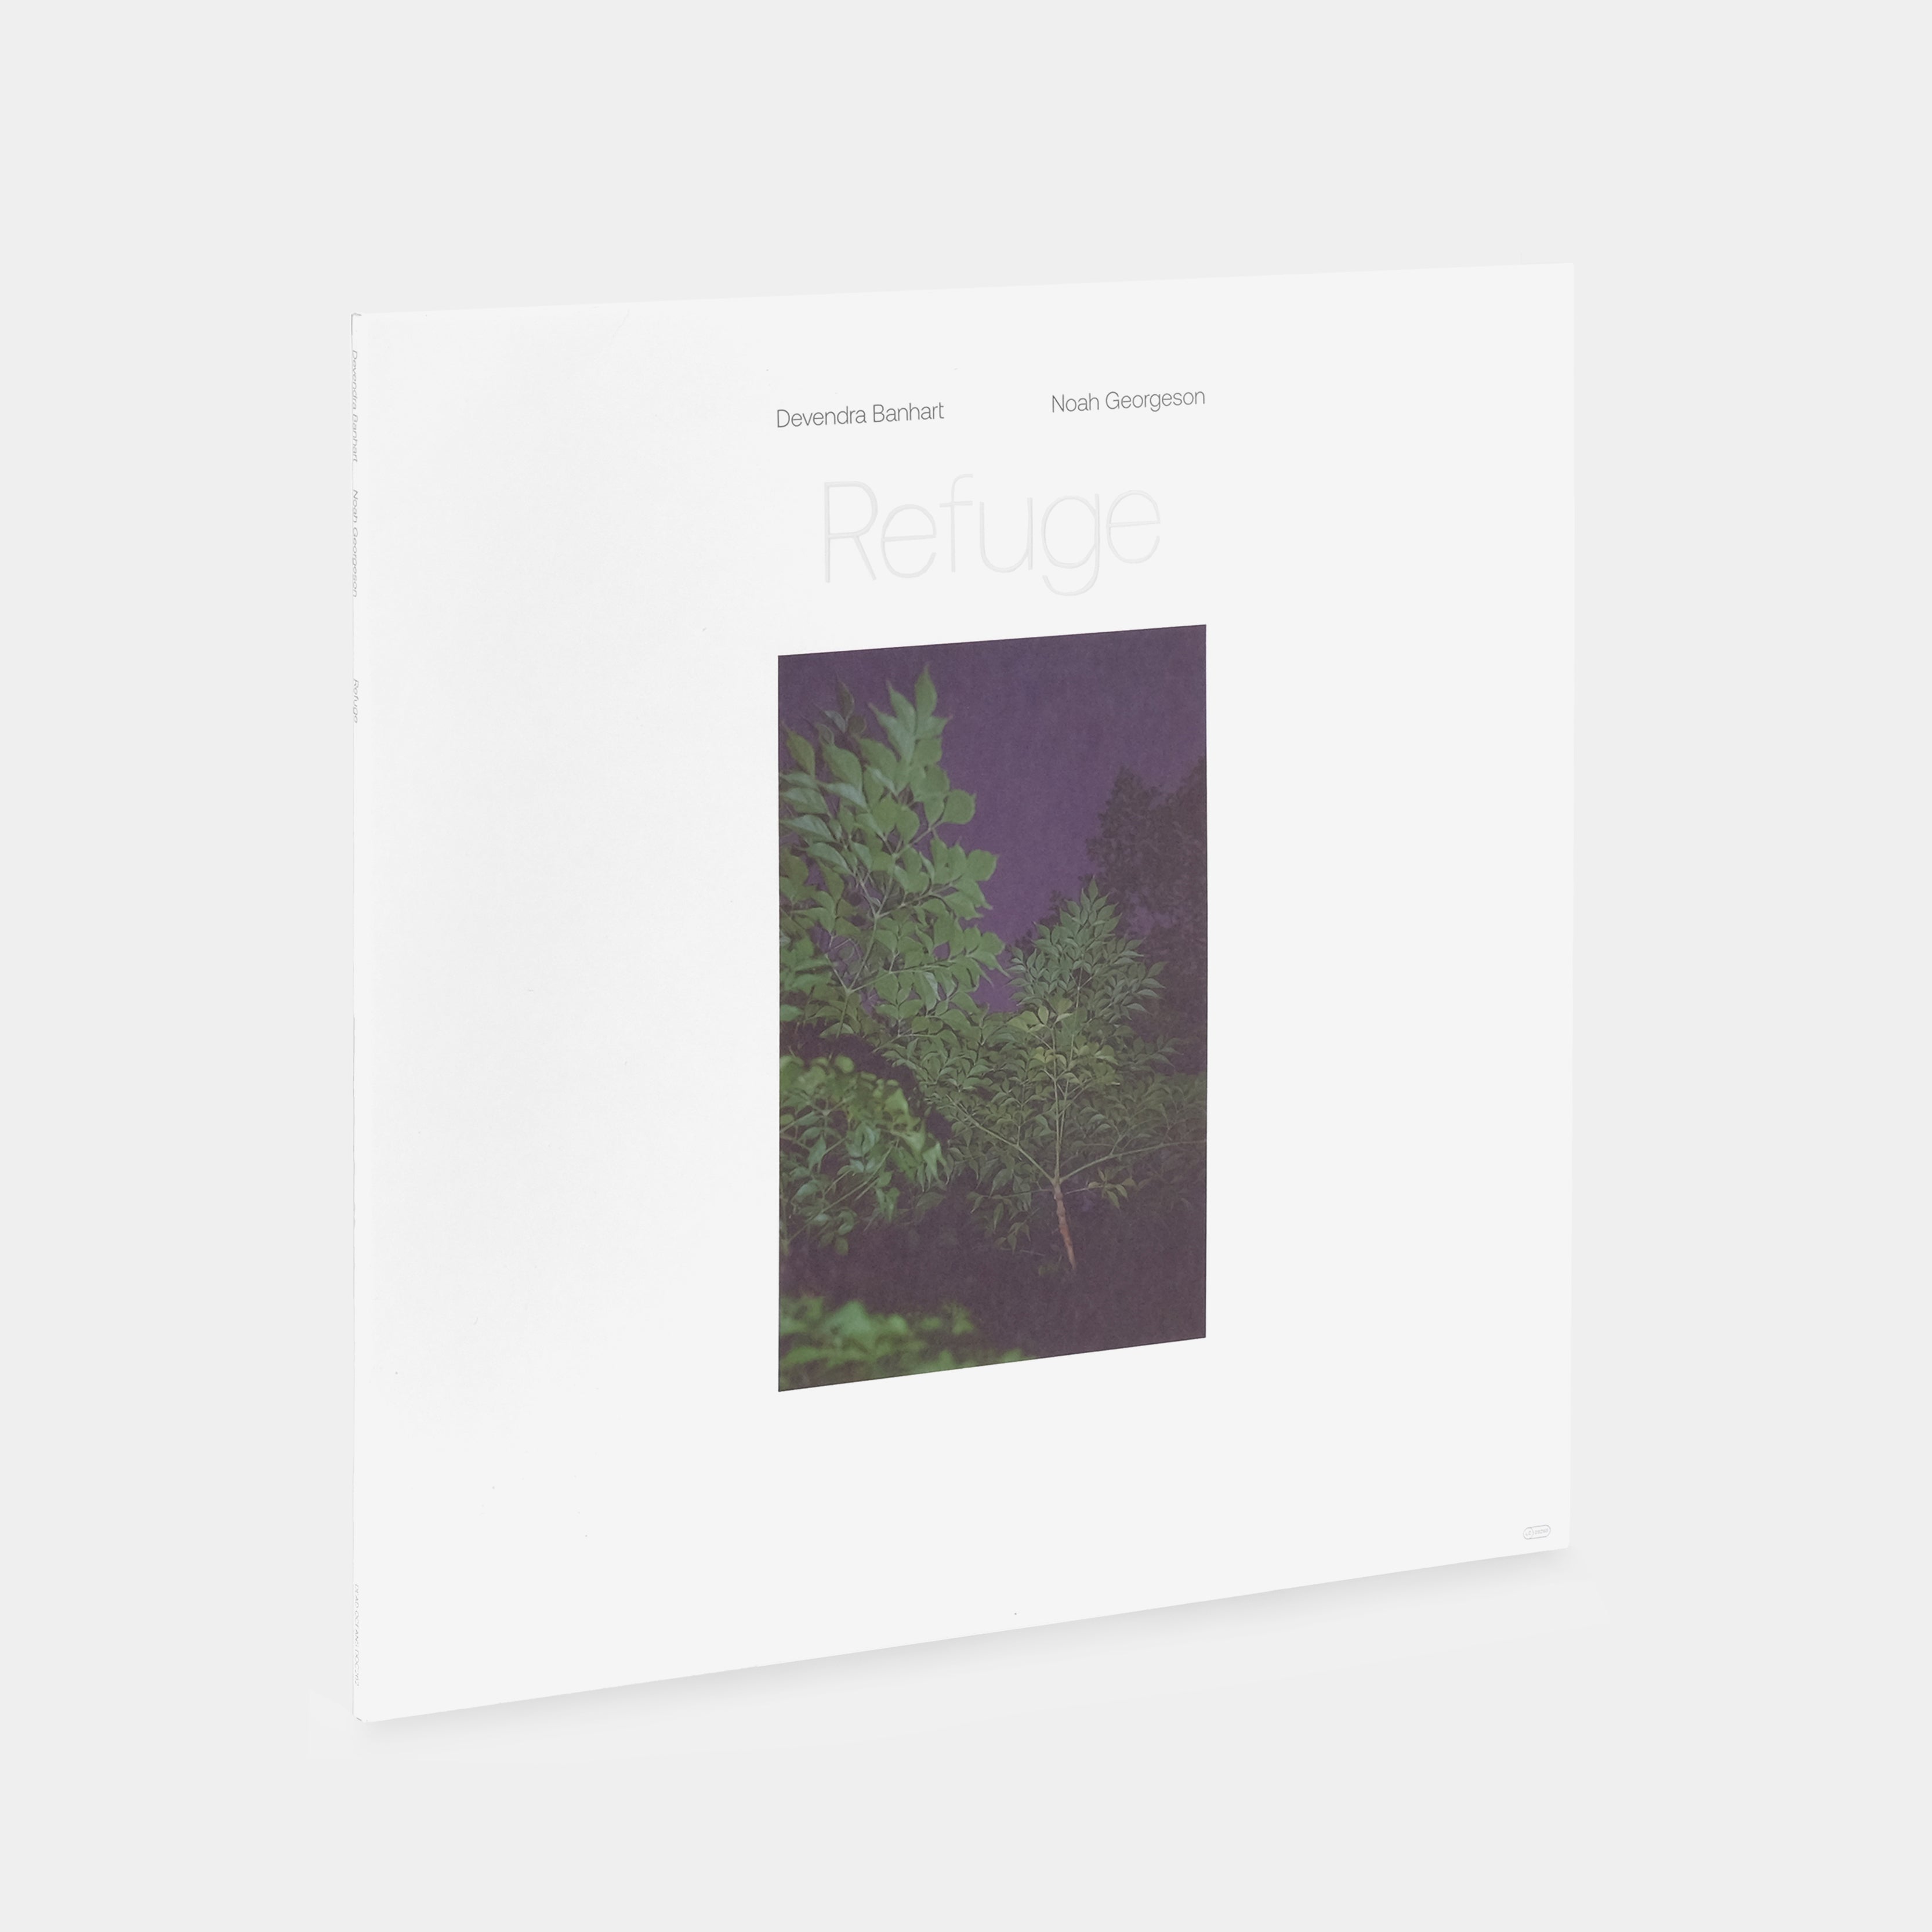 Devendra Banhart & Noah Georgeson - Refuge 2xLP Blue Seagrass Wave Translucent Vinyl Record